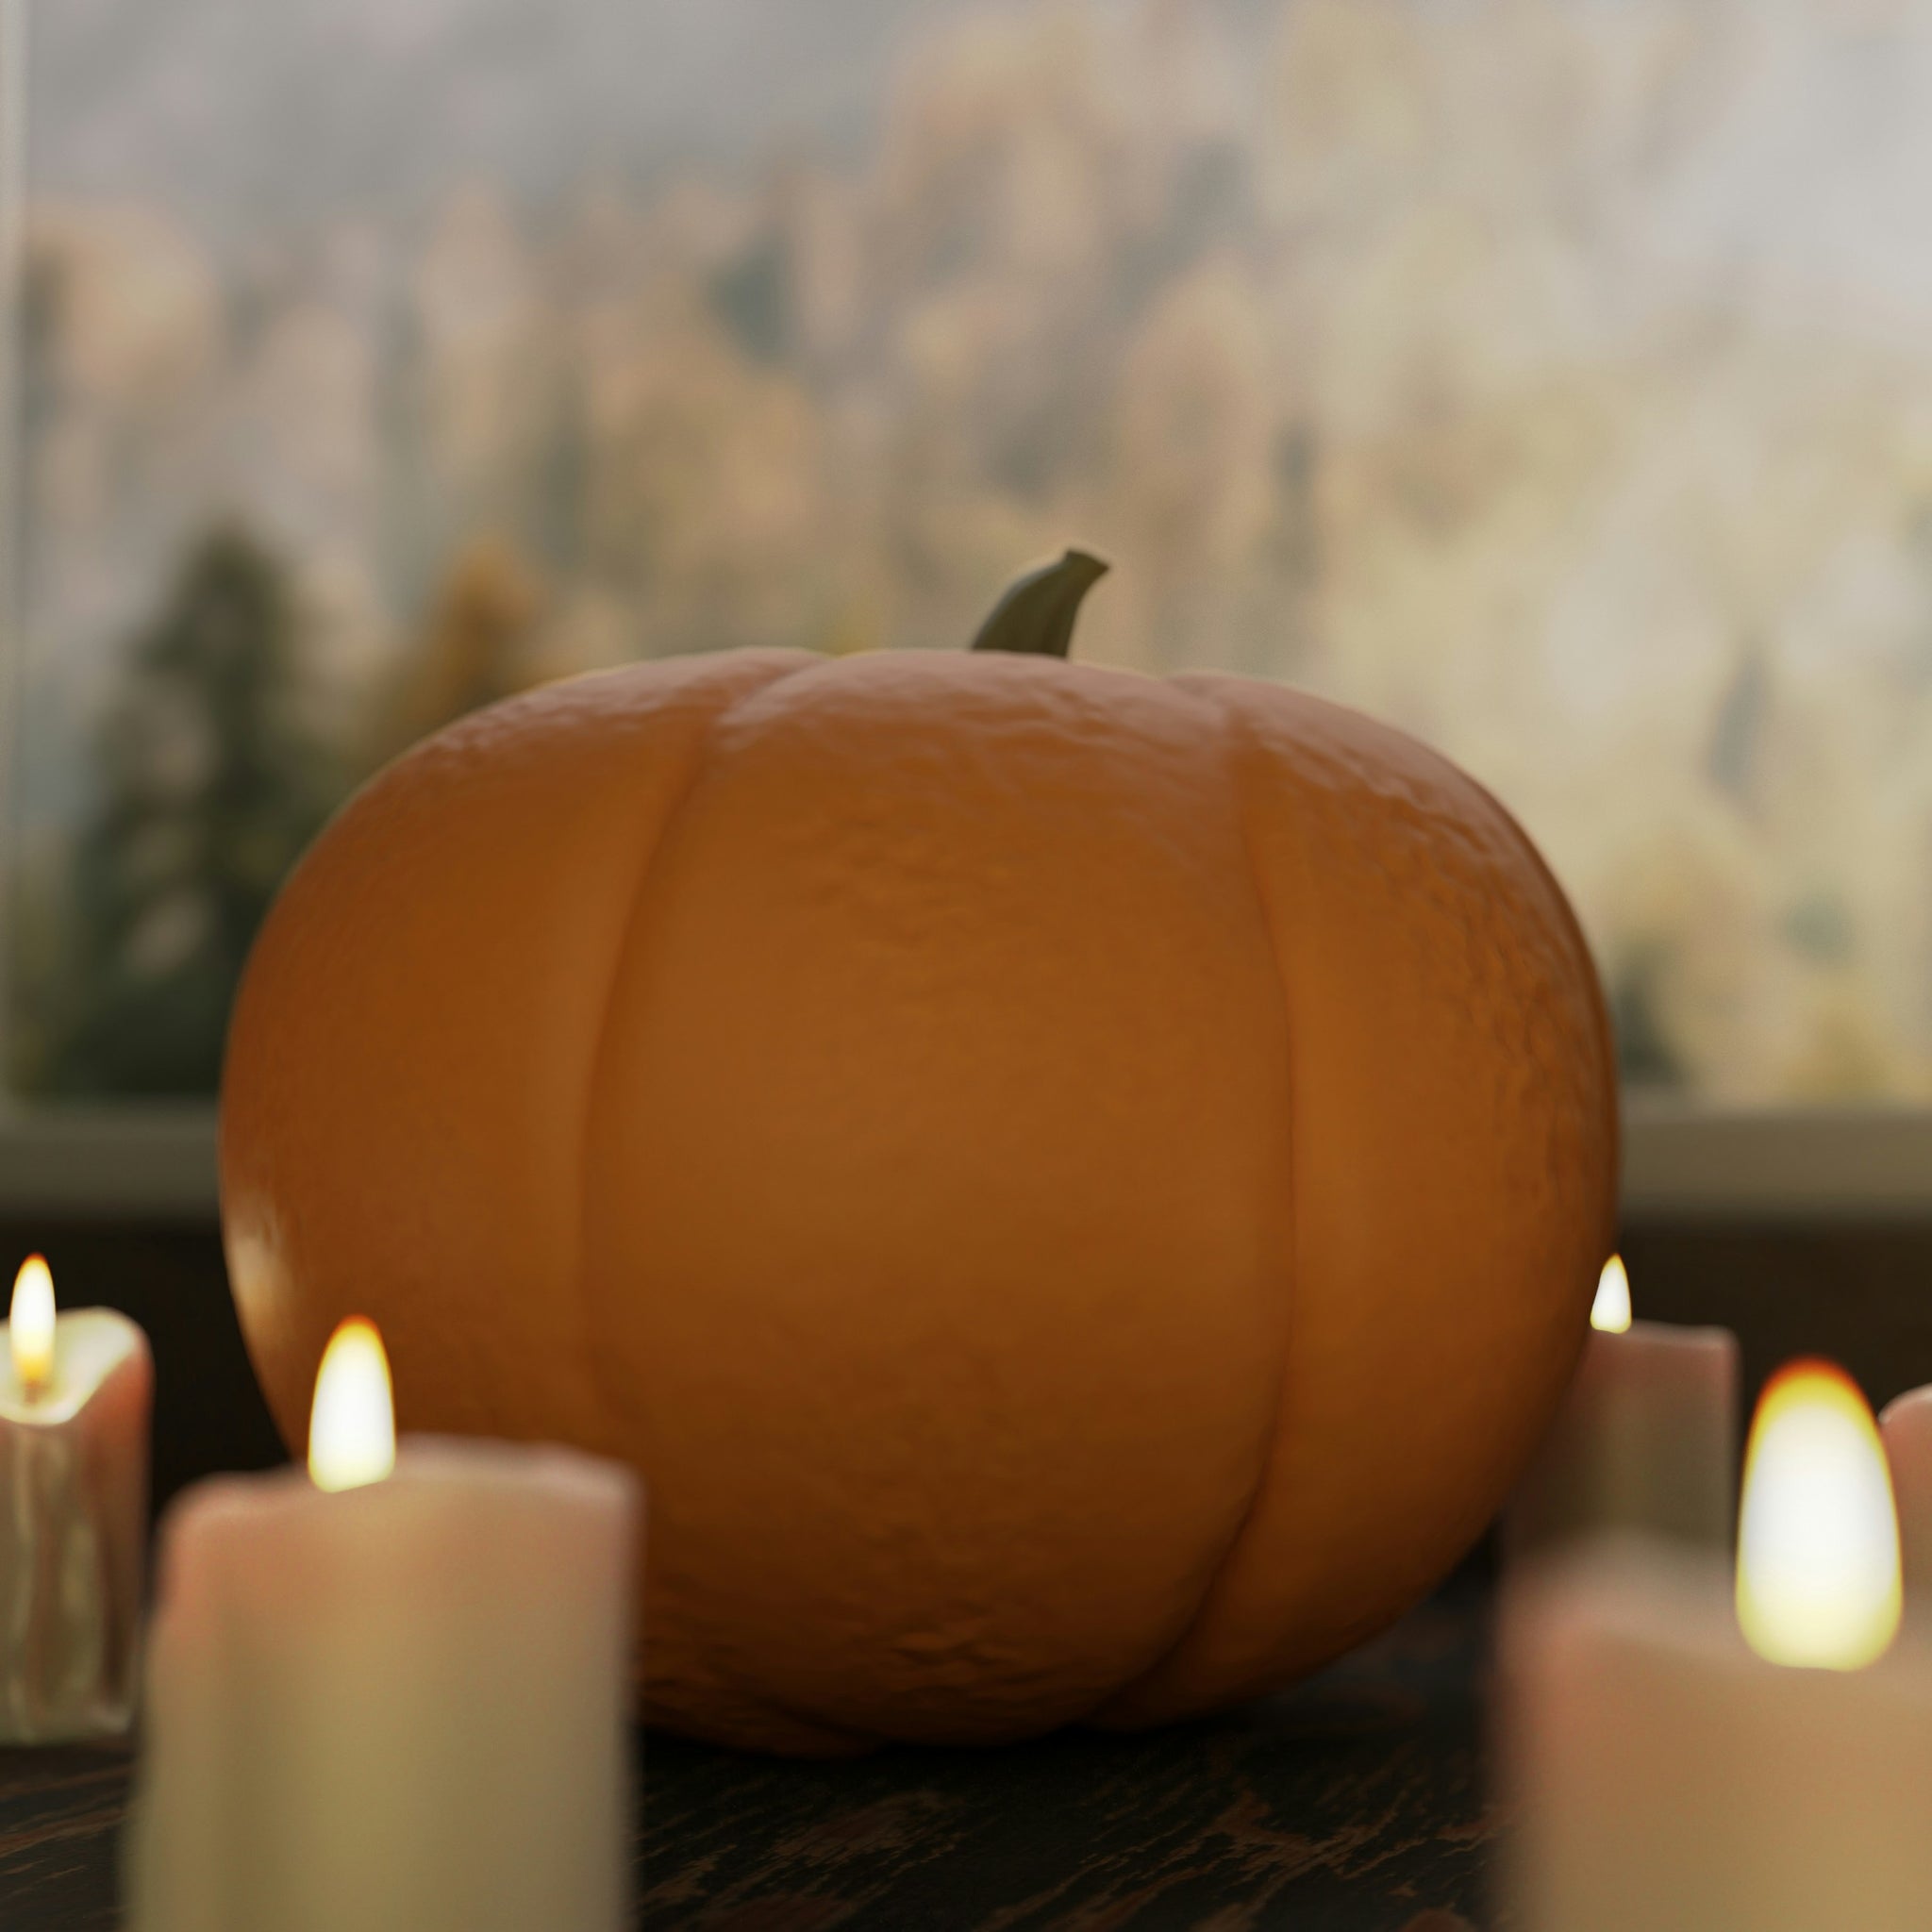 Pumpkin and candles